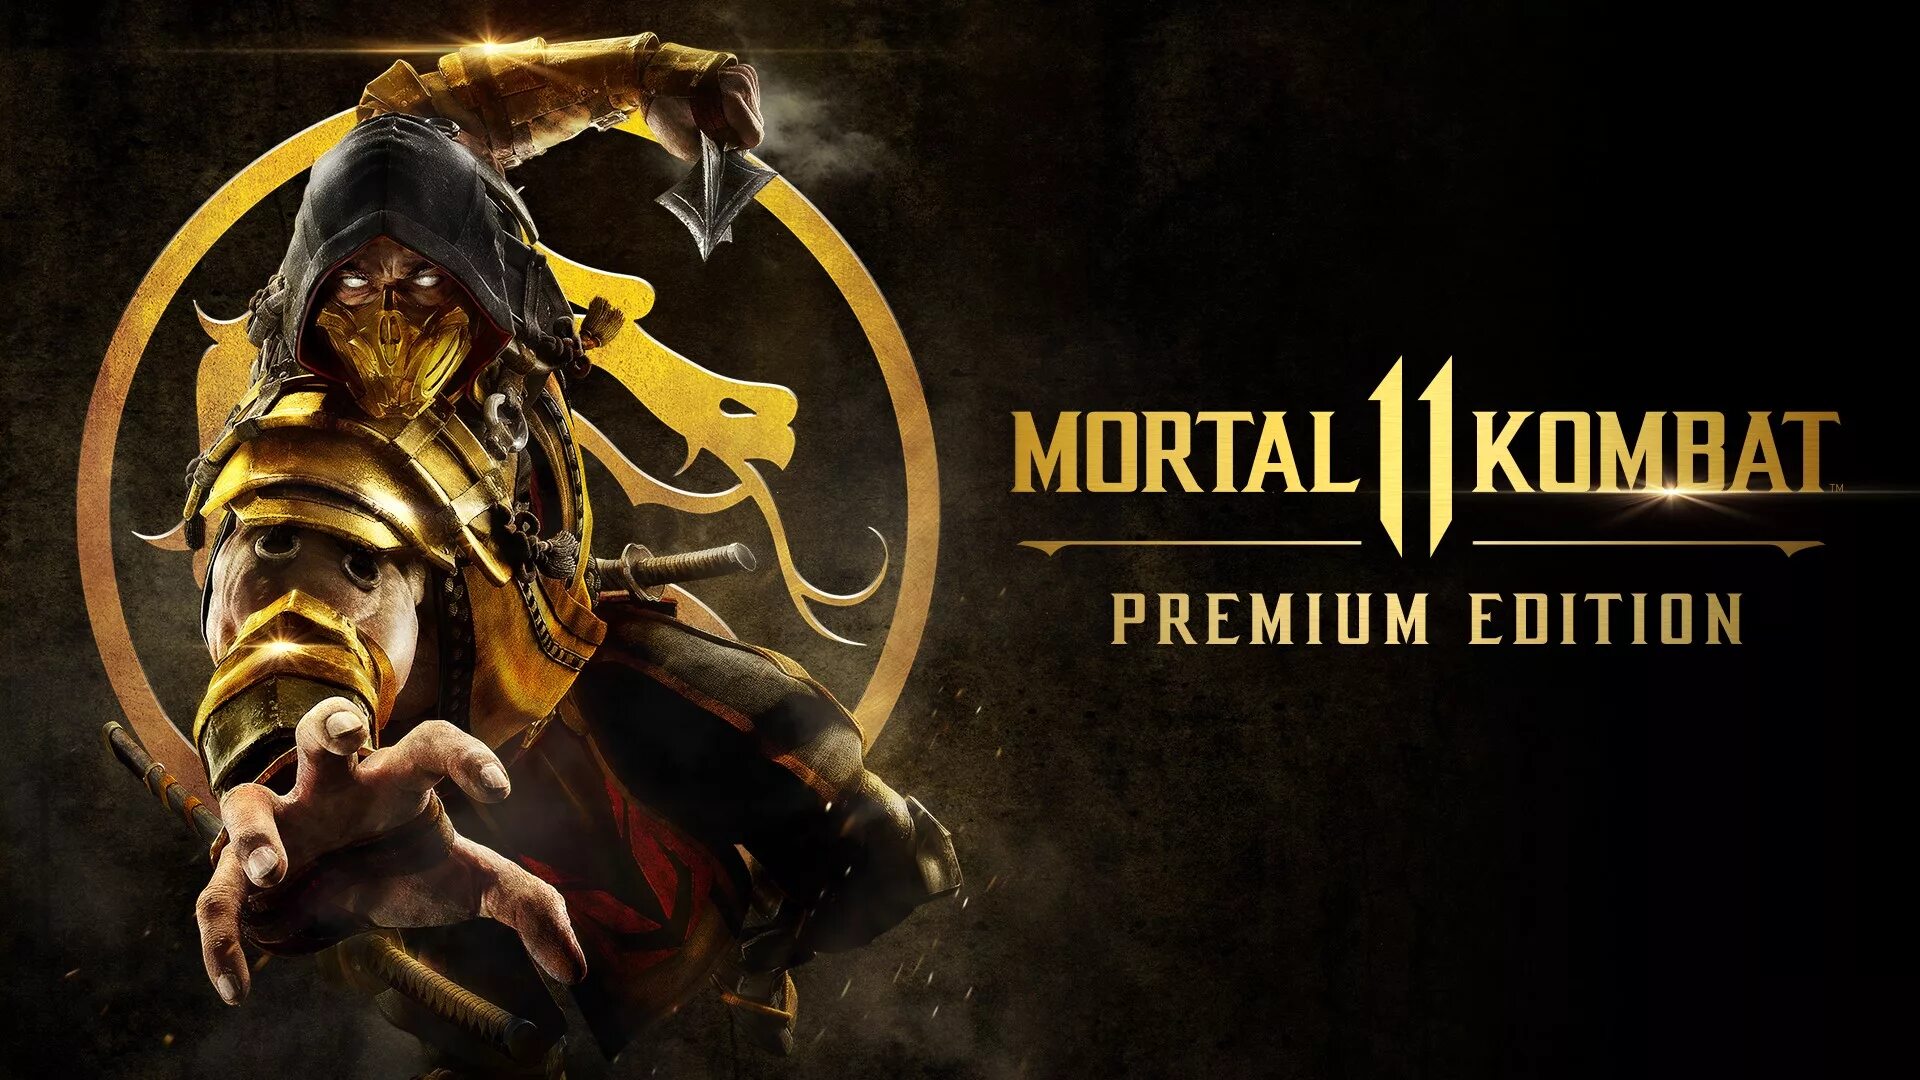 MK 11 Ultimate. Mortal Kombat 11 (ps4). Mortal Kombat 11. Premium Edition. PLAYSTATION 4 Mortal Kombat 11 обложка.